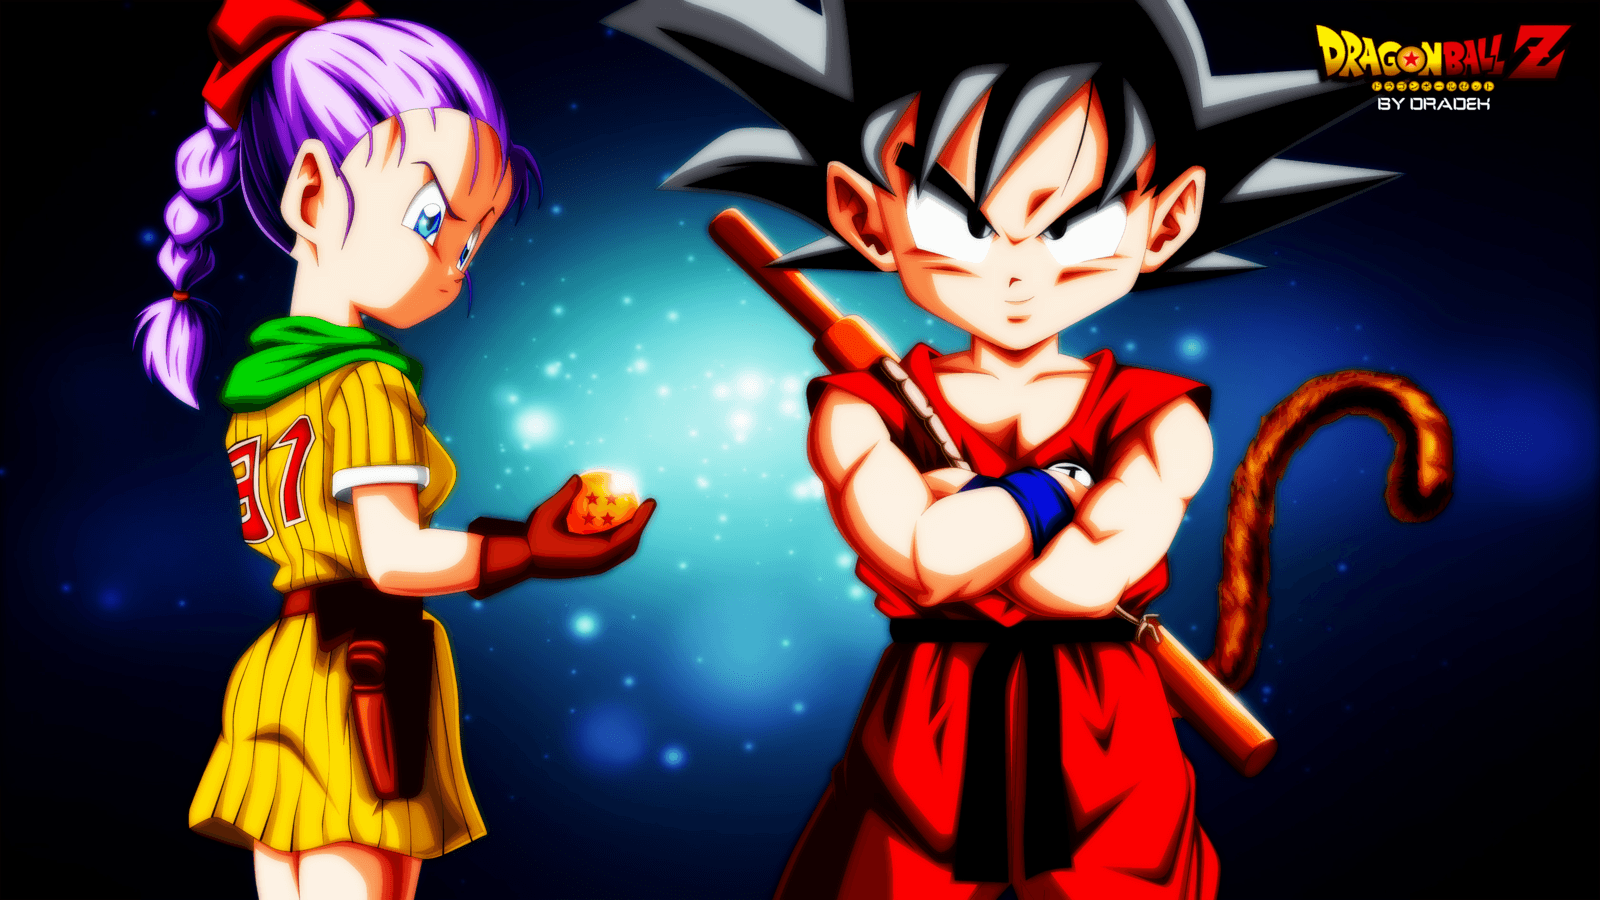 Bulma and Goku Wallpaper and Background Imagex900